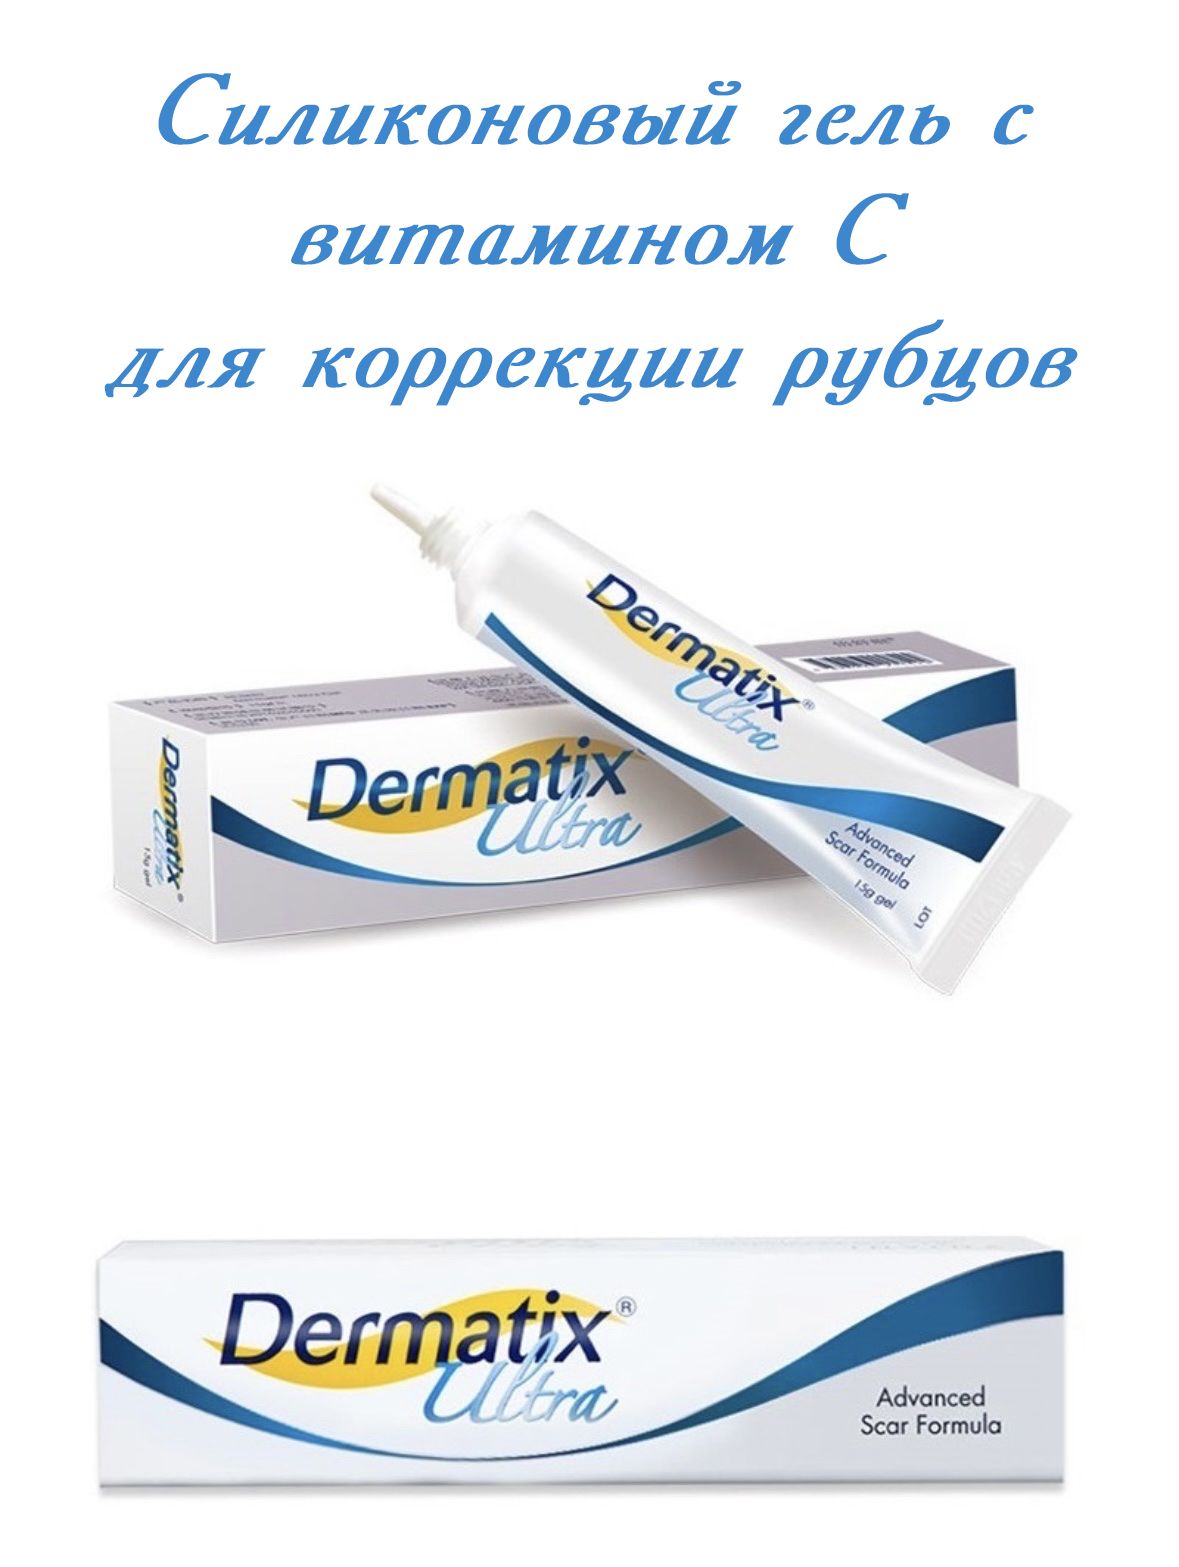 Dermatix белая упаковка